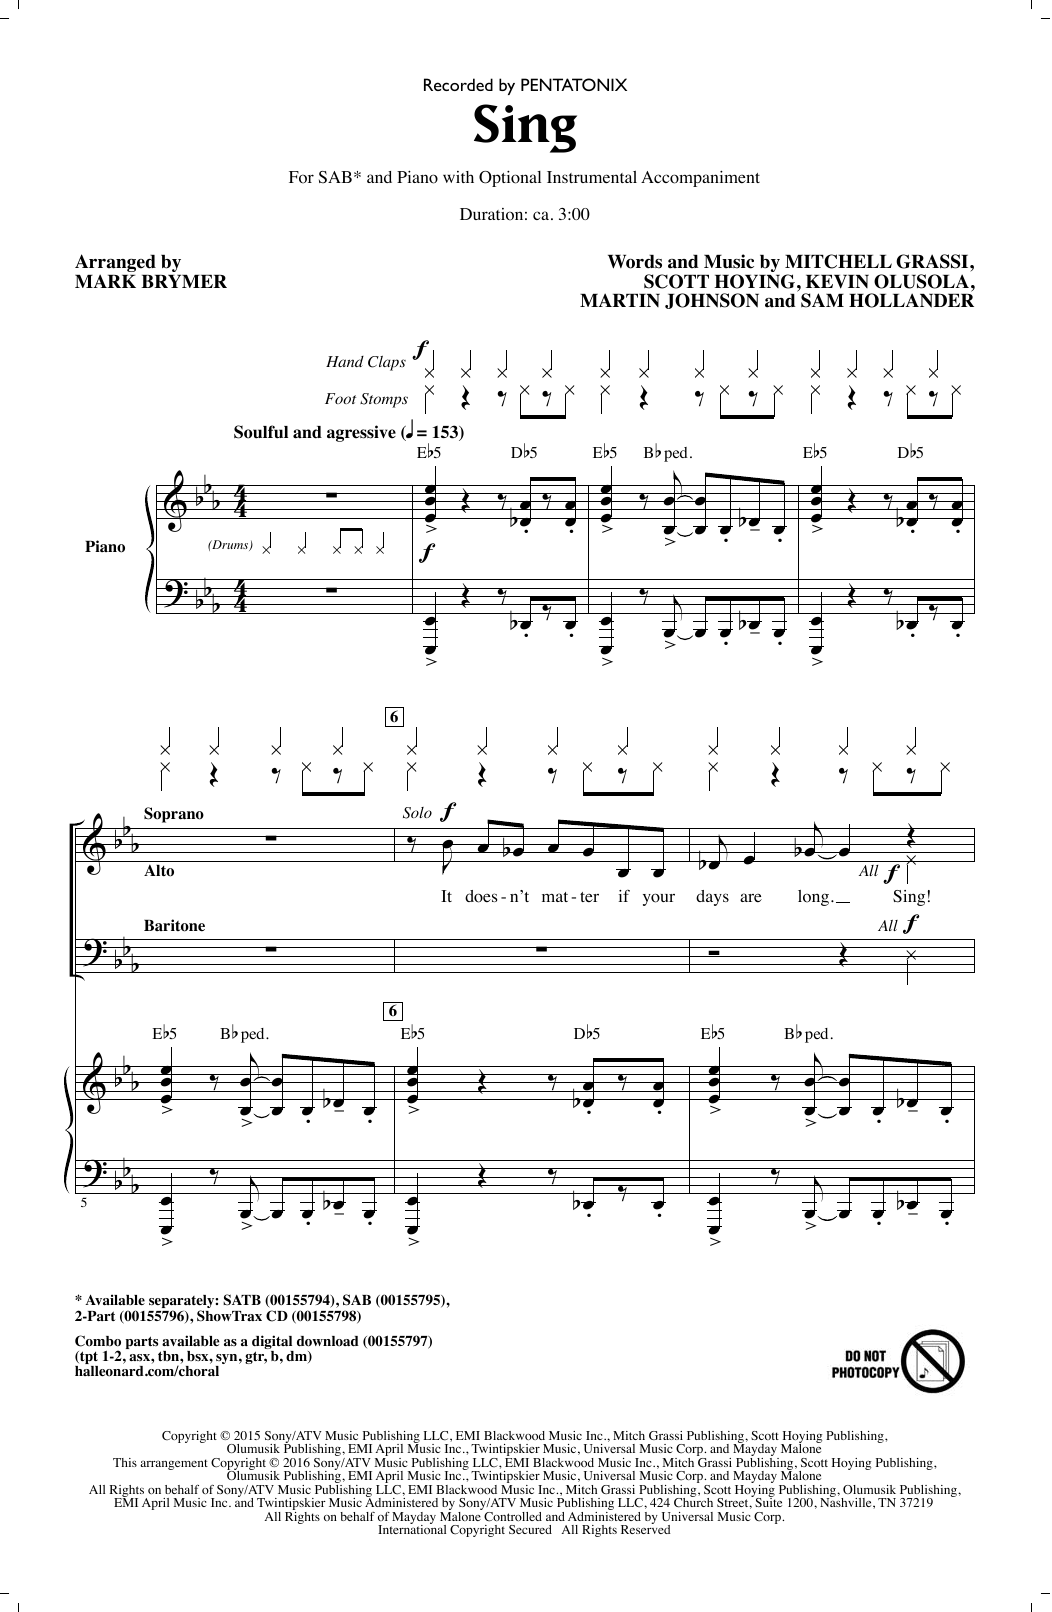 Pentatonix Sing (arr. Mark Brymer) Sheet Music Notes & Chords for 2-Part Choir - Download or Print PDF